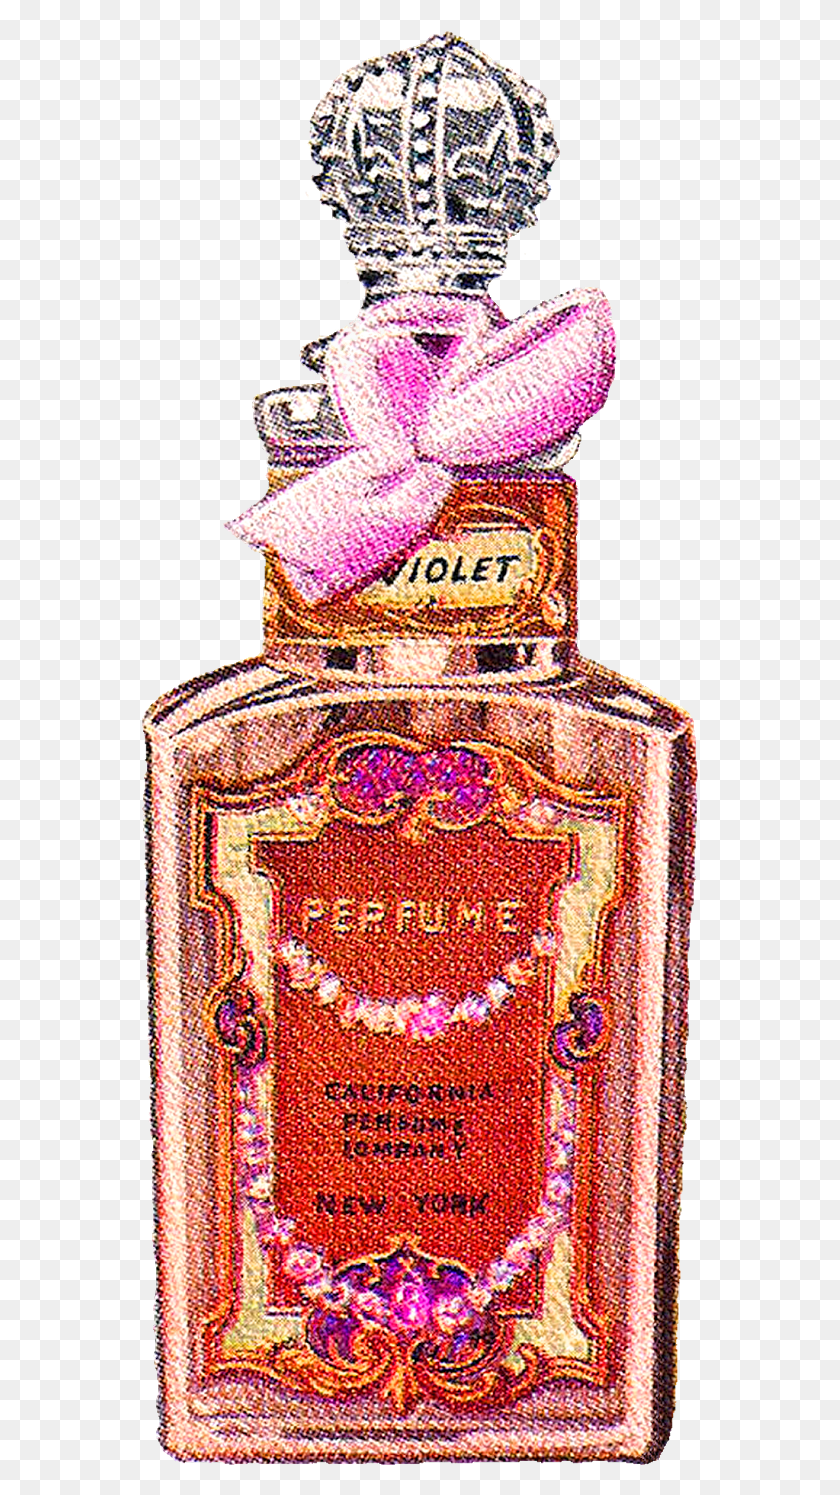 557x1435 This Vintage Image Of A Bottle Of Violet Perfume Would Bottle, Jar, Cosmetics, Ink Bottle HD PNG Download